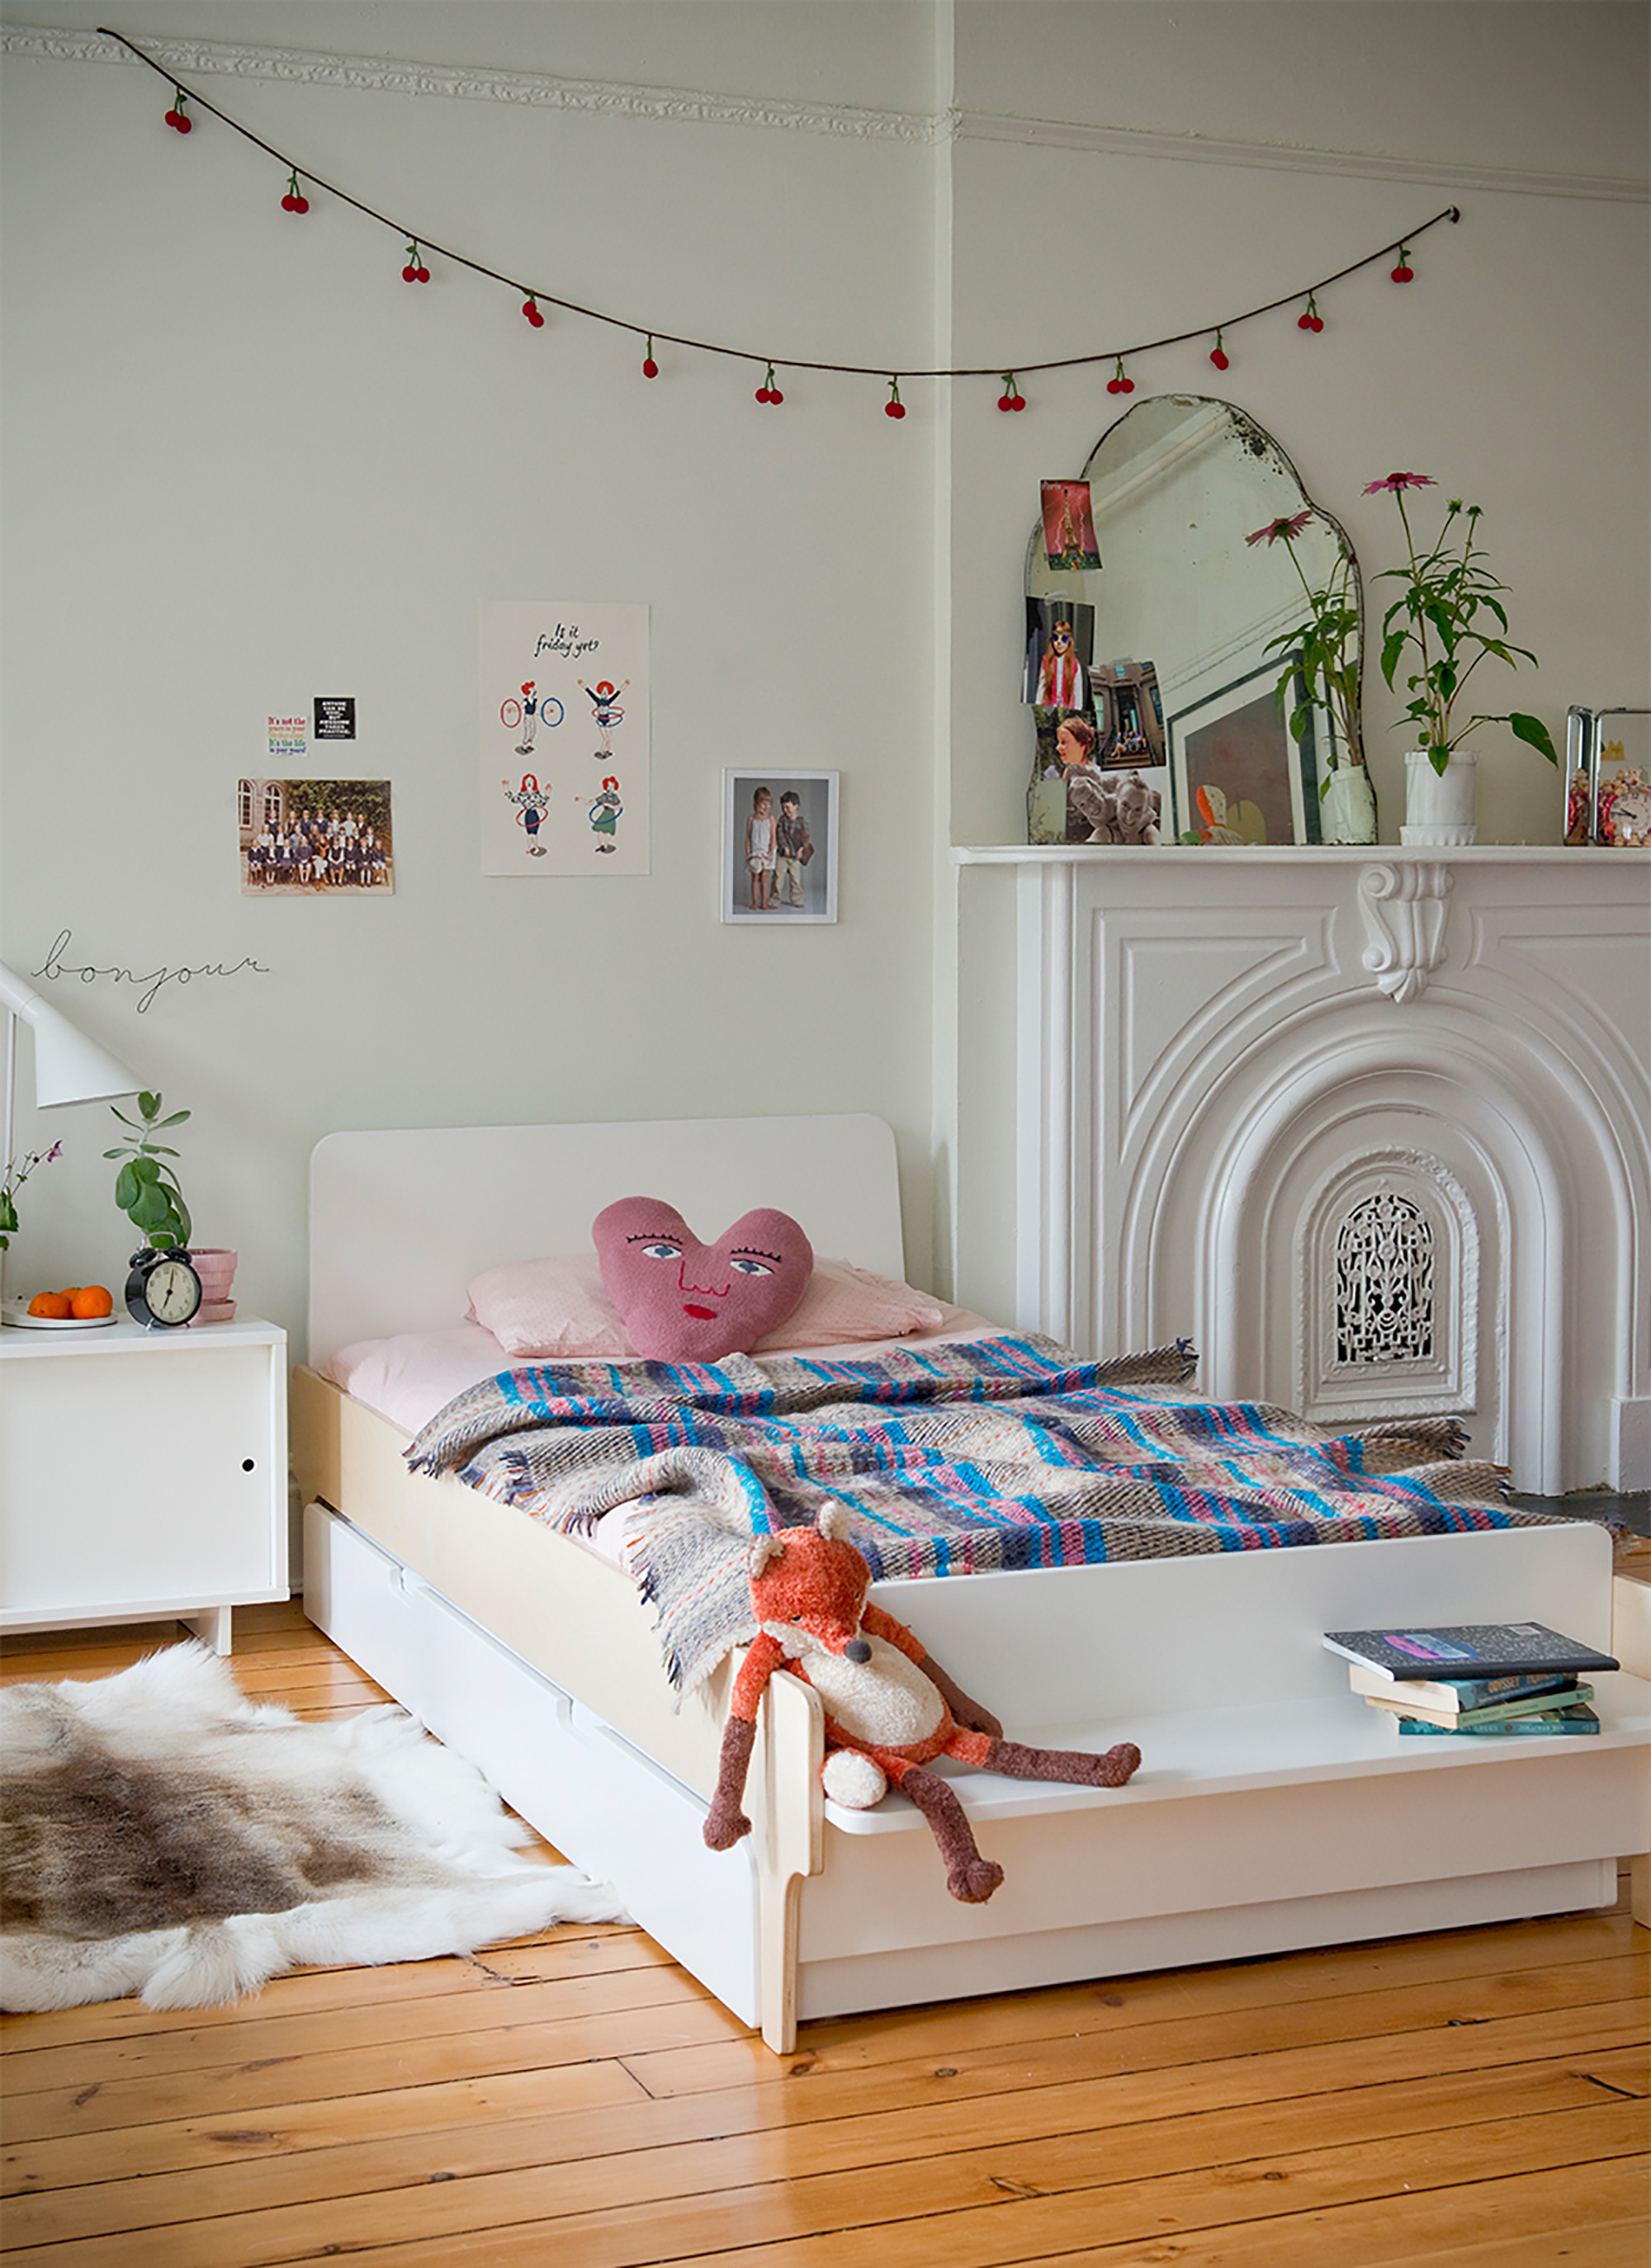 Kids bedroom by Cuckcooland